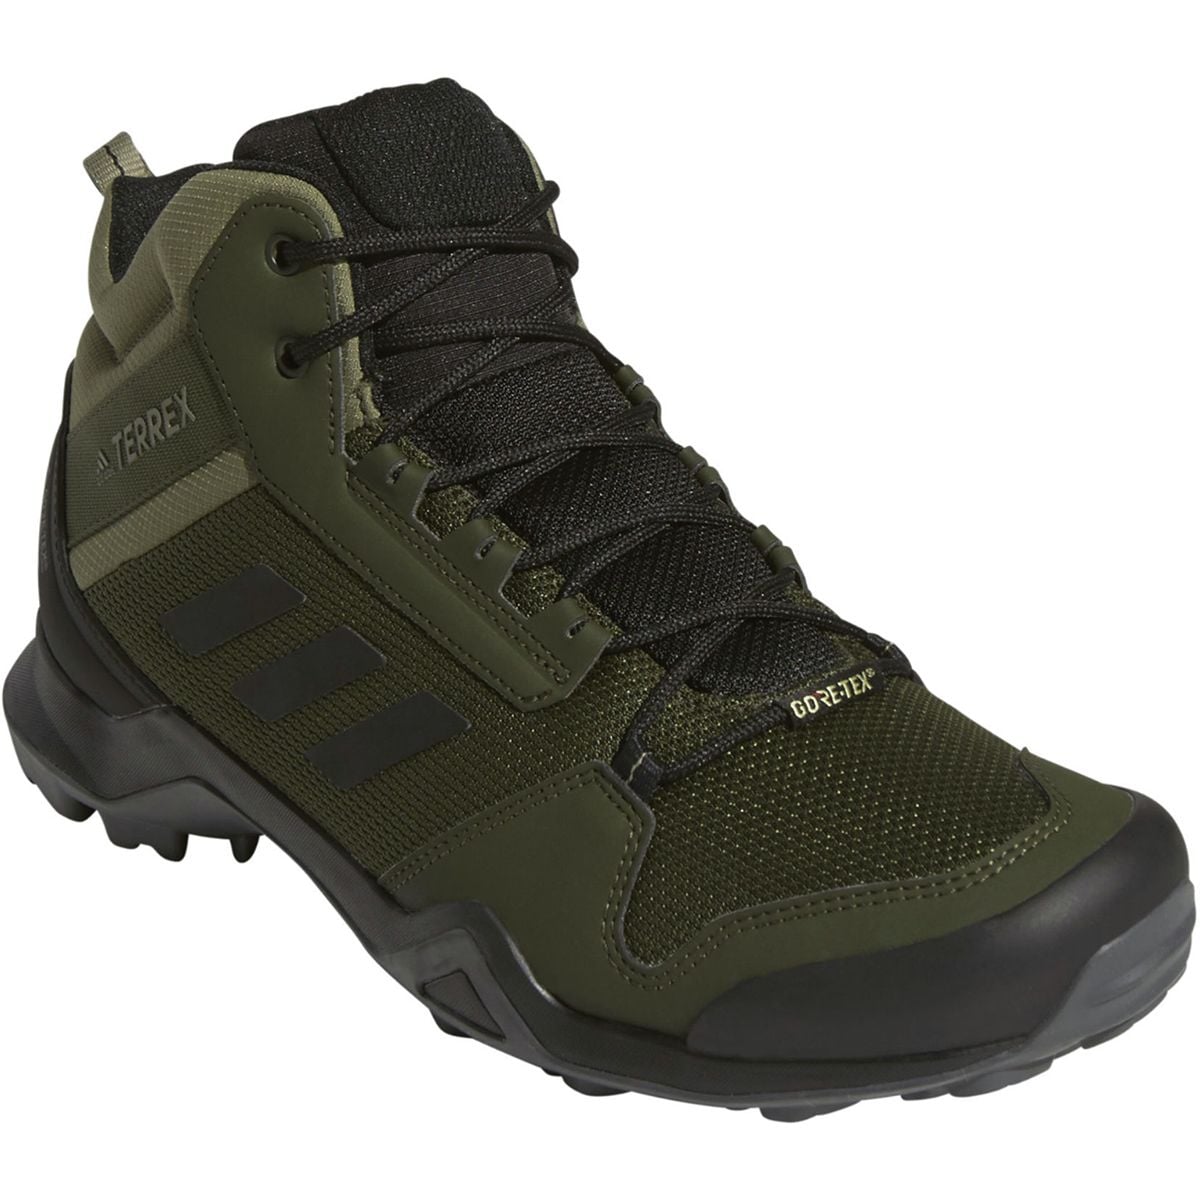 Adidas Outdoor Terrex AX3 Mid GTX Hiking Boot - Men's | eBay